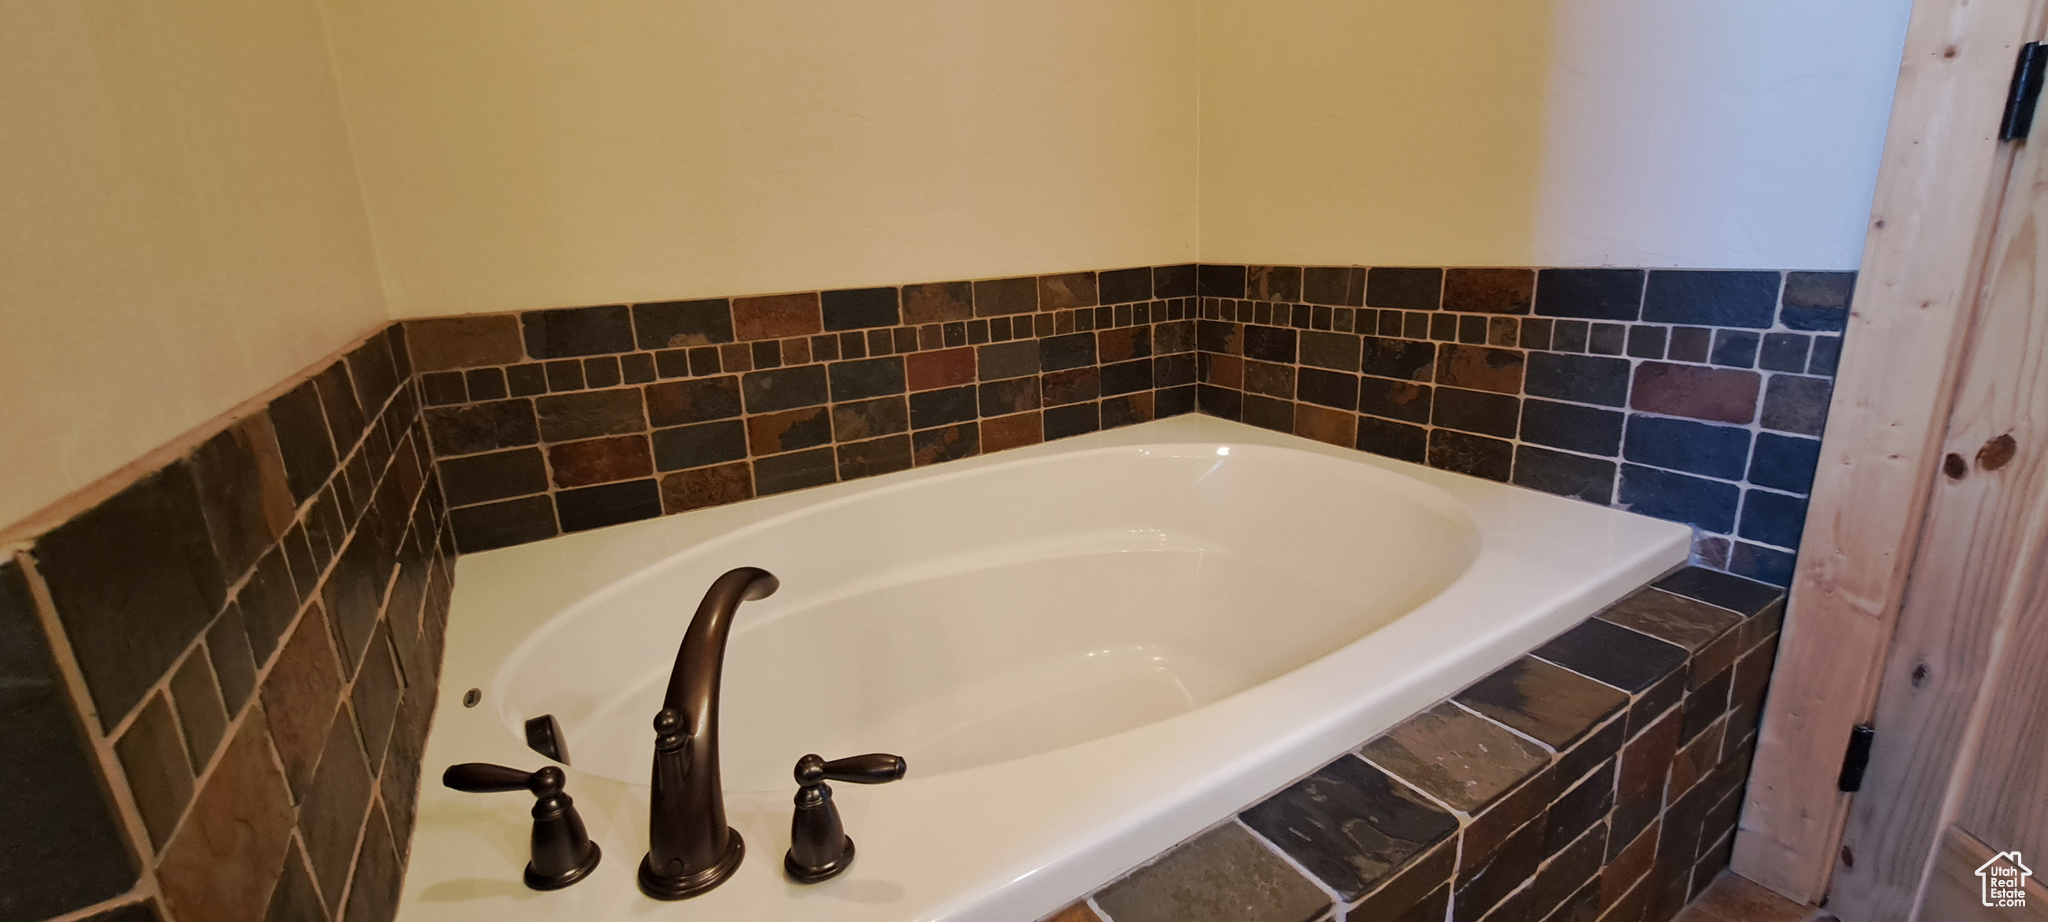 Bathroom featuring tiled bath